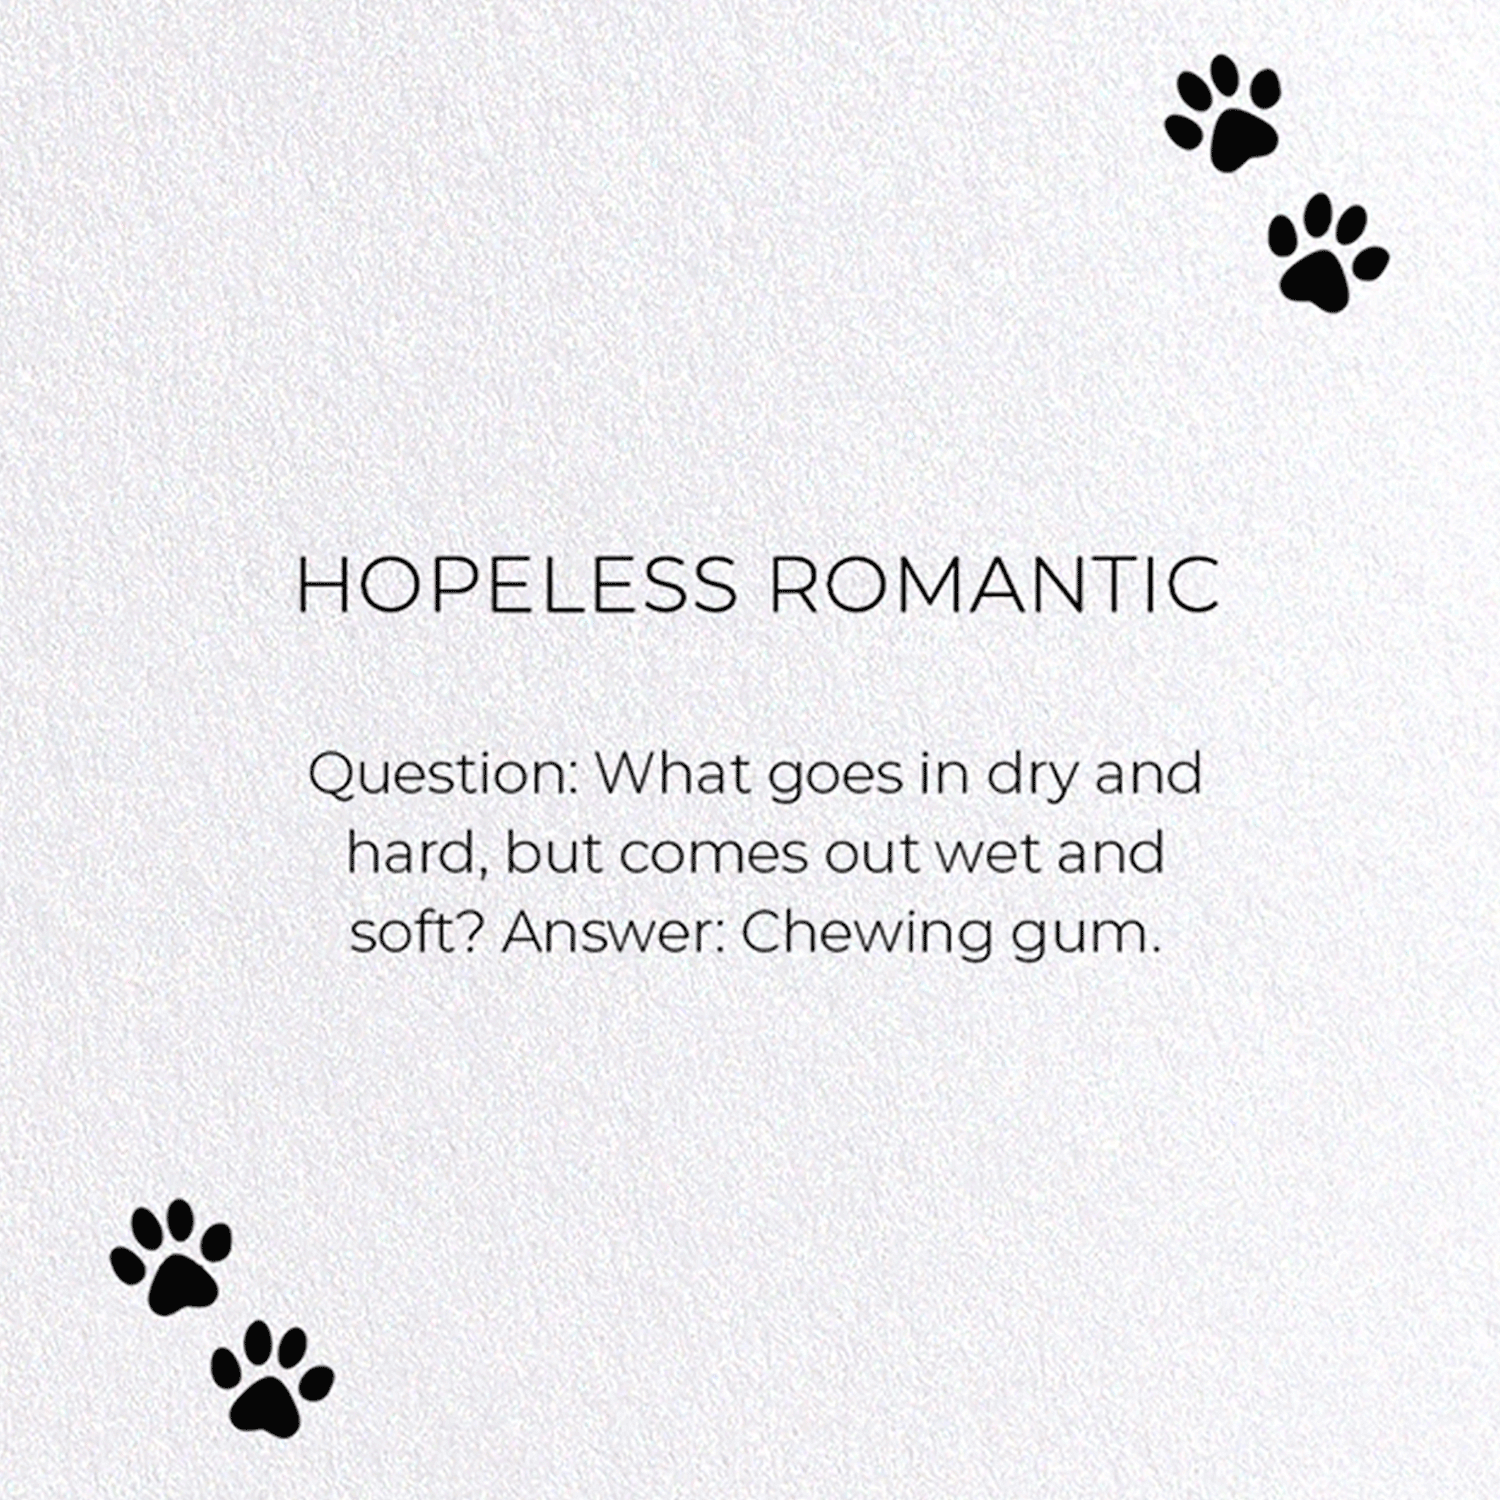 HOPELESS ROMANTIC: Funny Animal Greeting Card